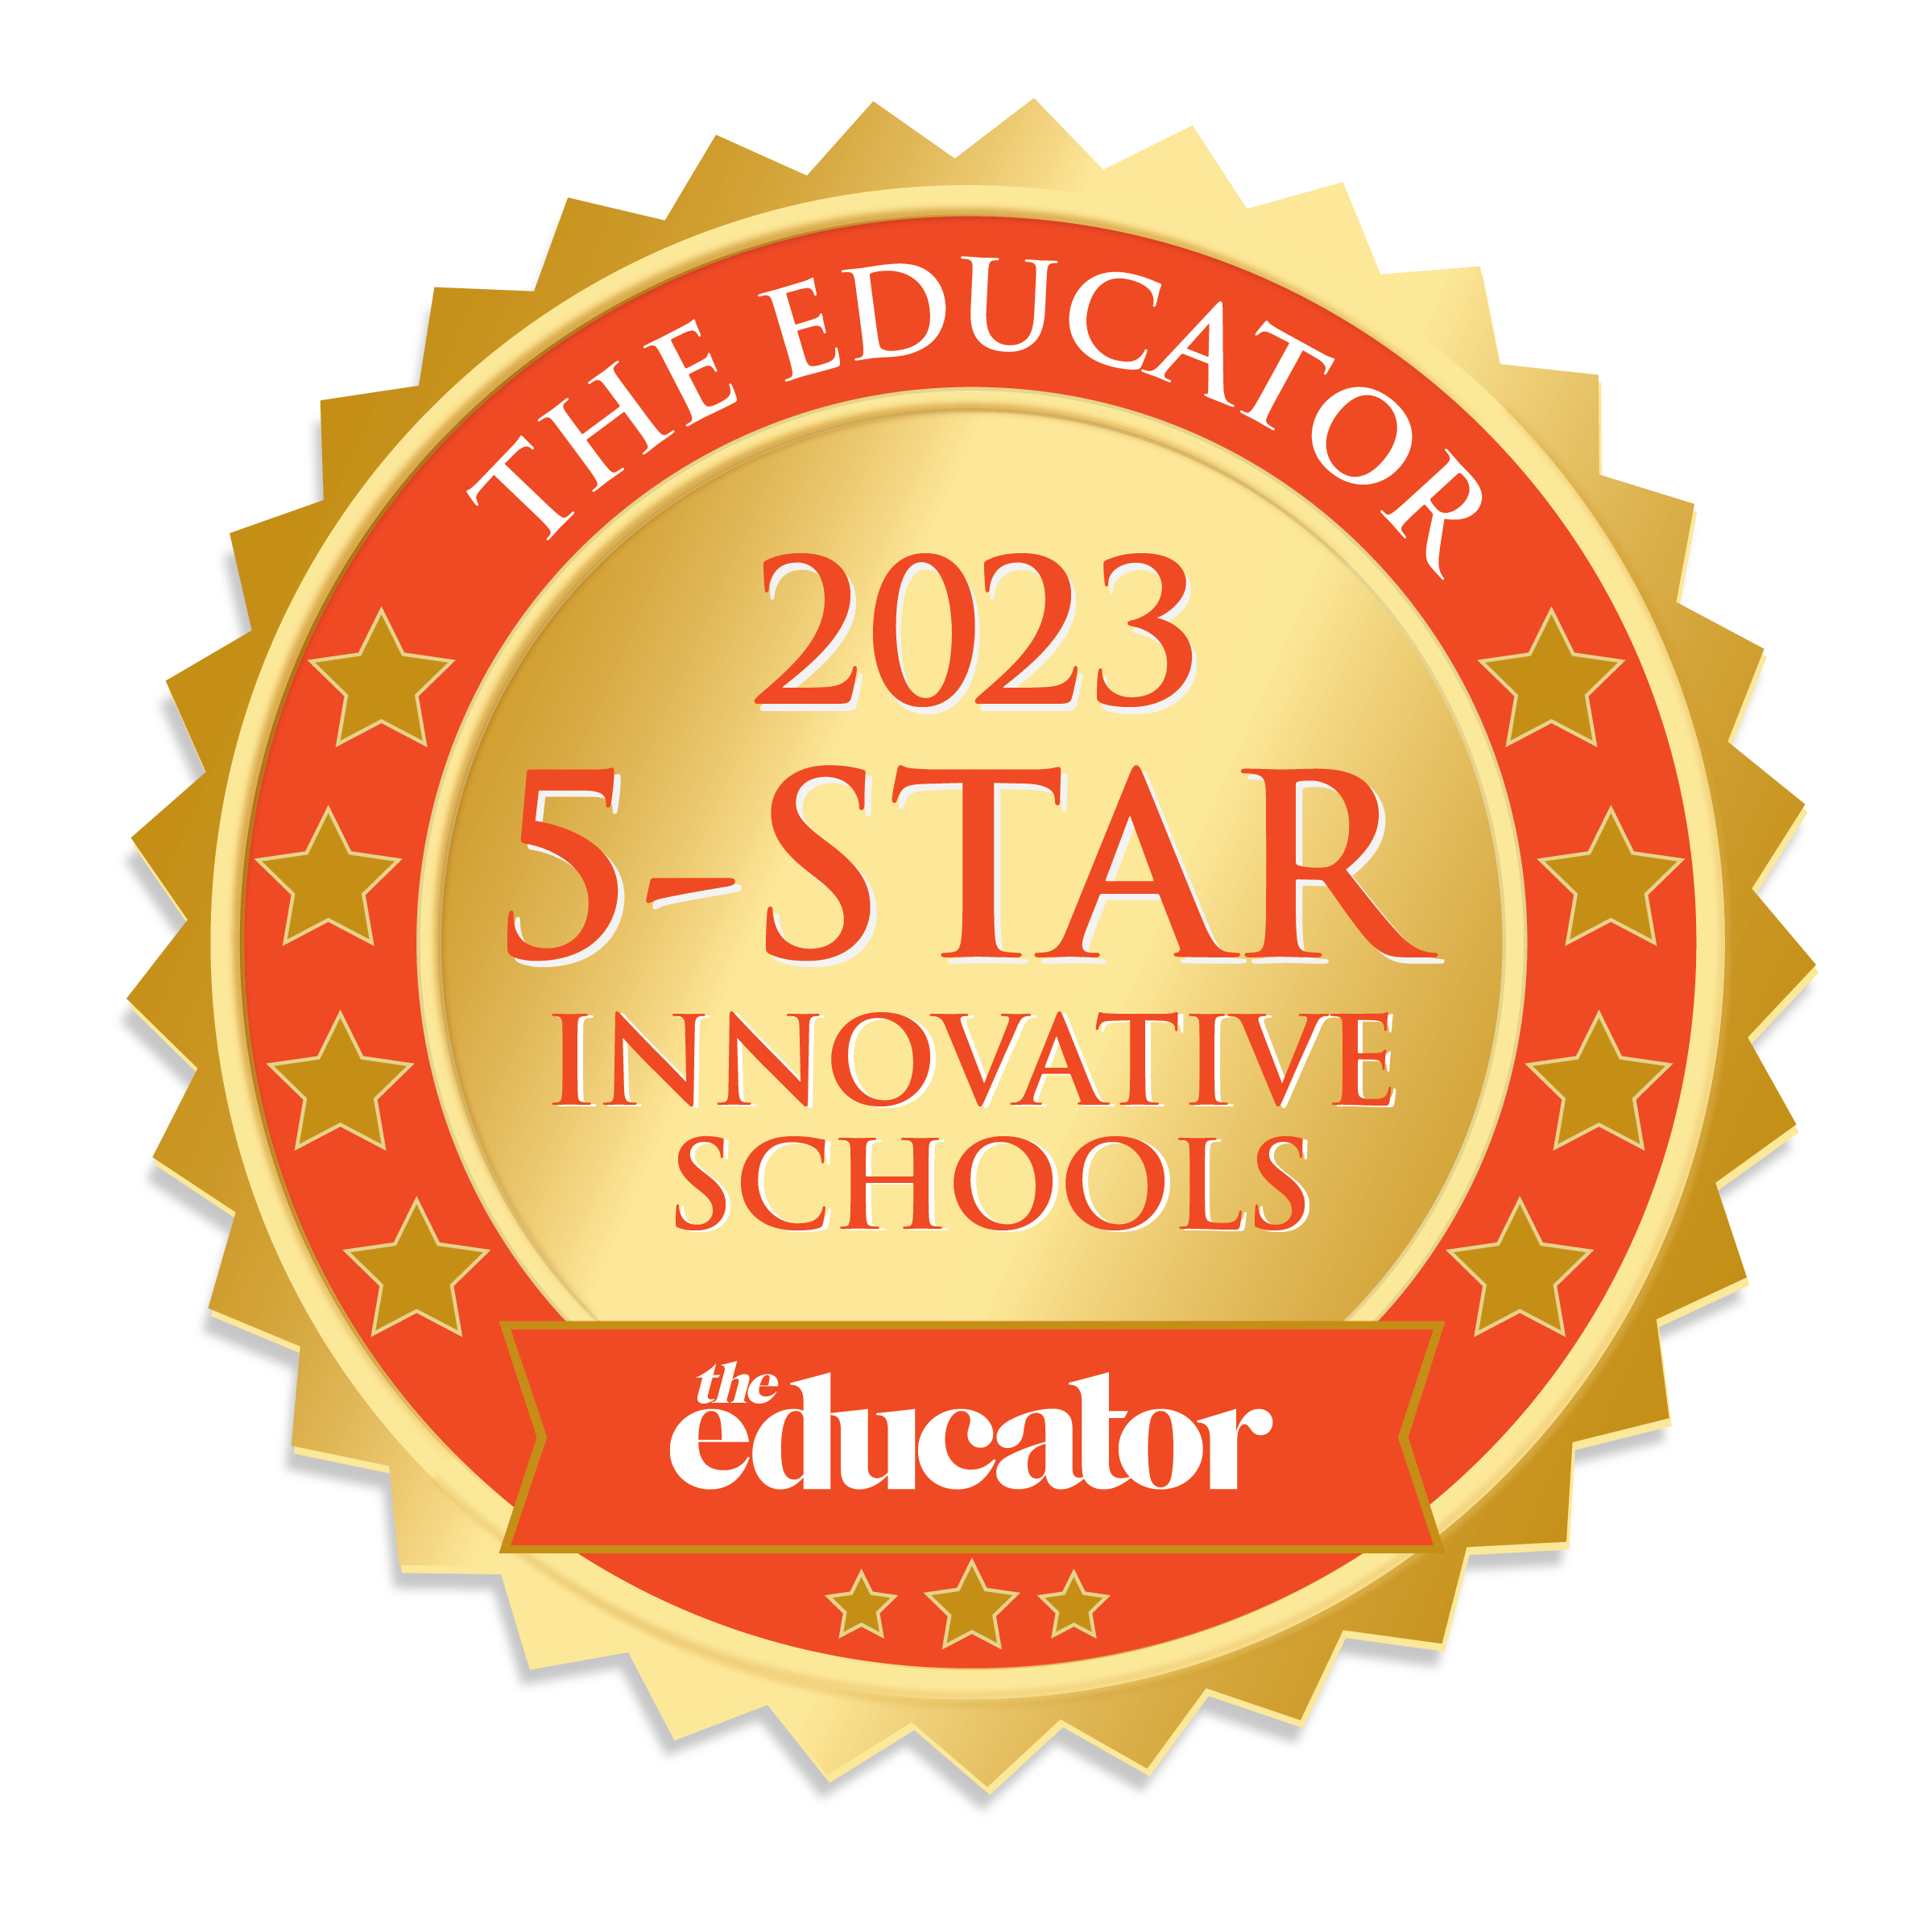 The Most Innovative Schools in Australia | 5-Star Innovative Schools 2023